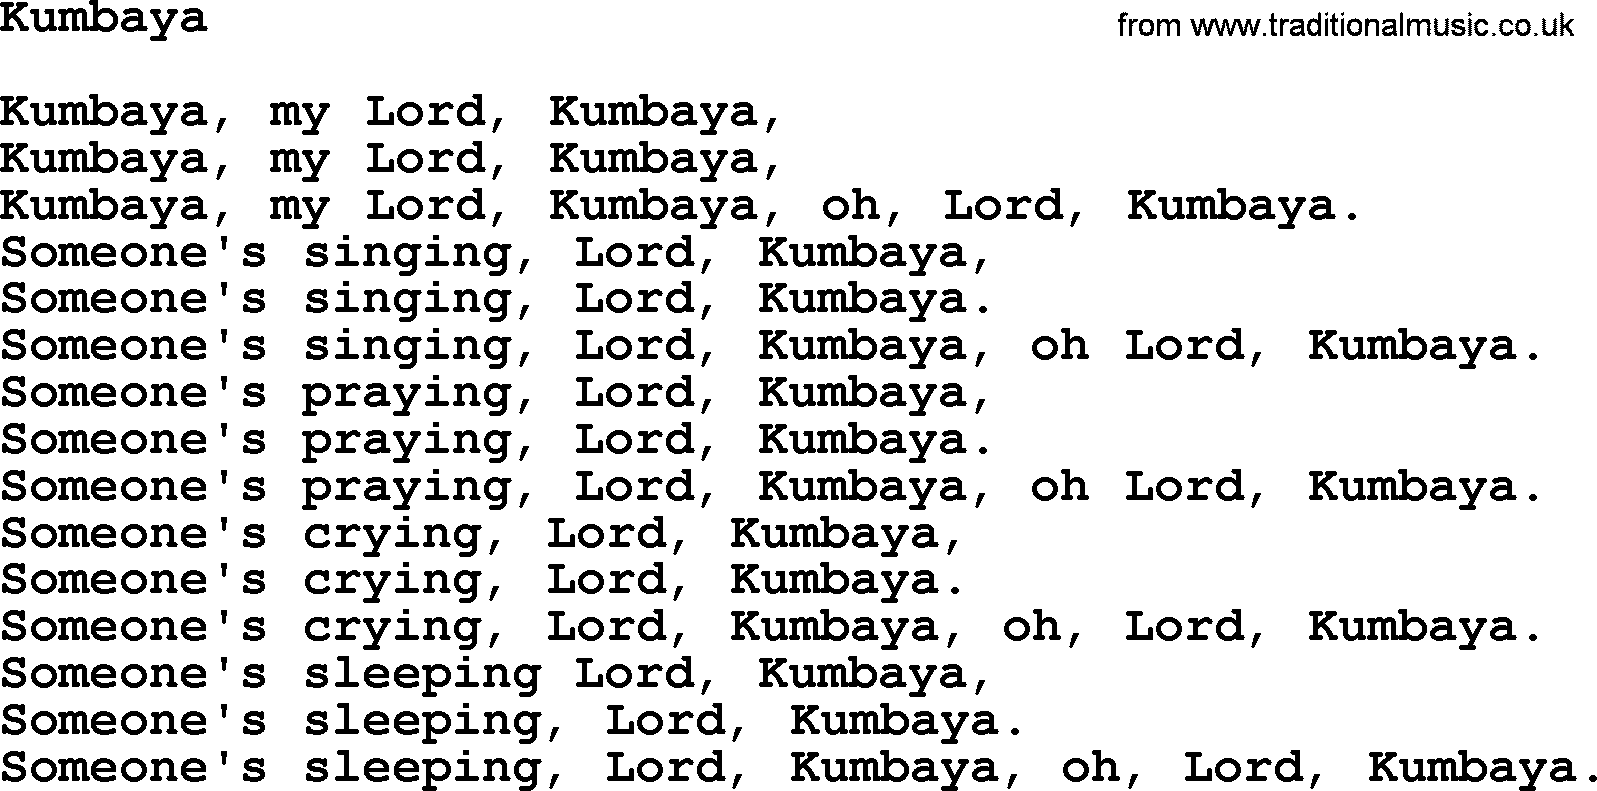 Joan Baez song Kumbaya, lyrics